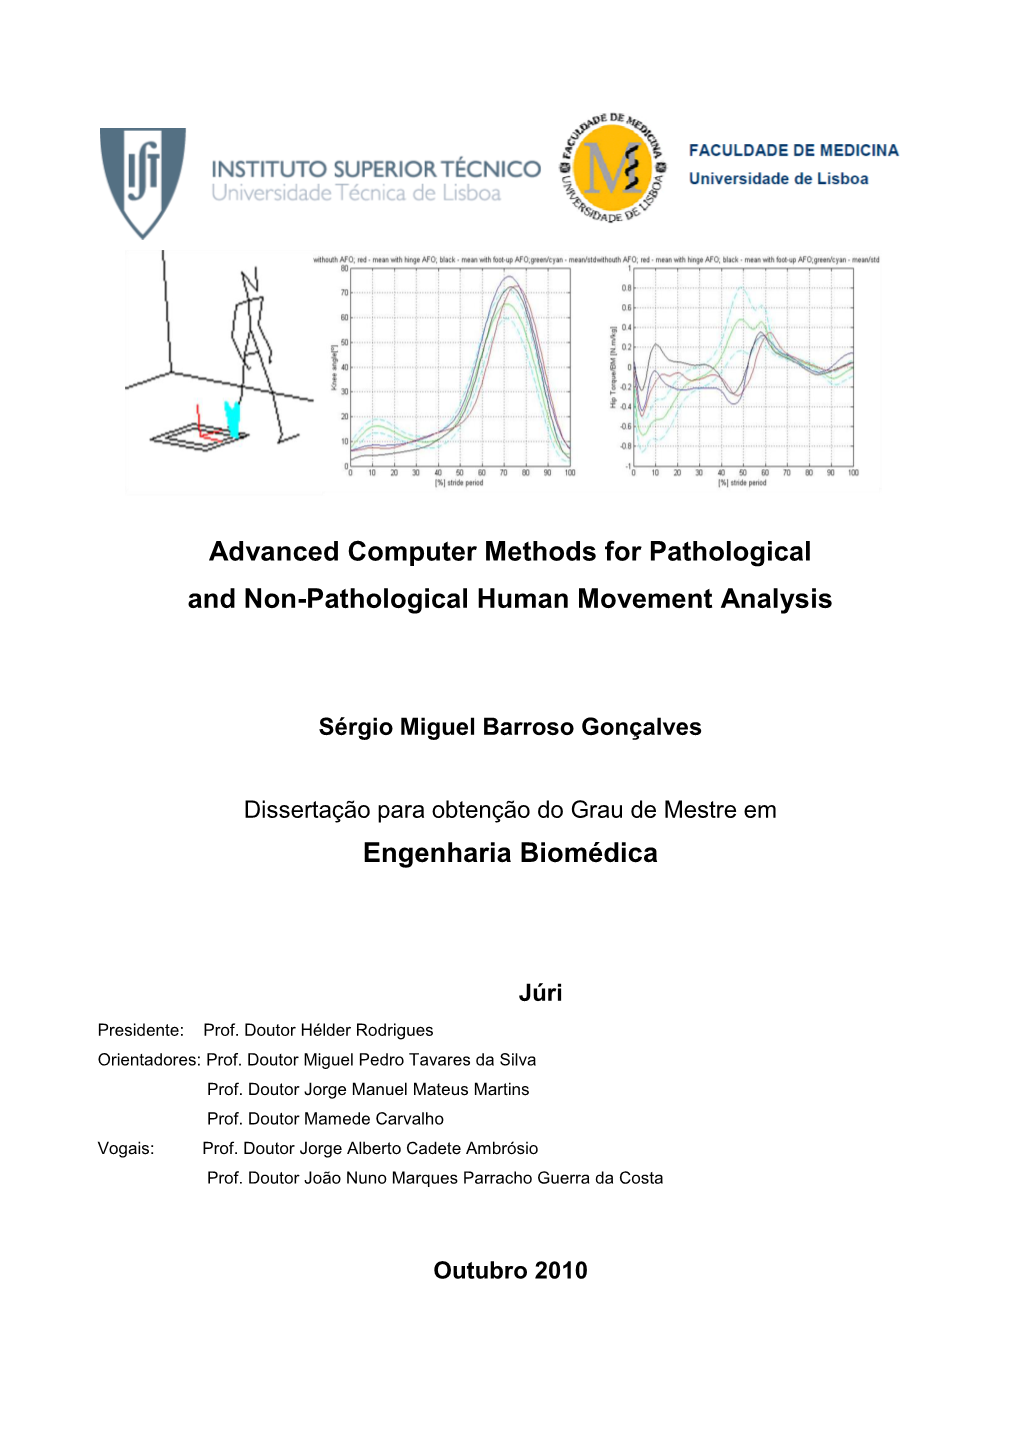 Advanced Computer Methods for Pathological and Non-Pathological Human Movement Analysis